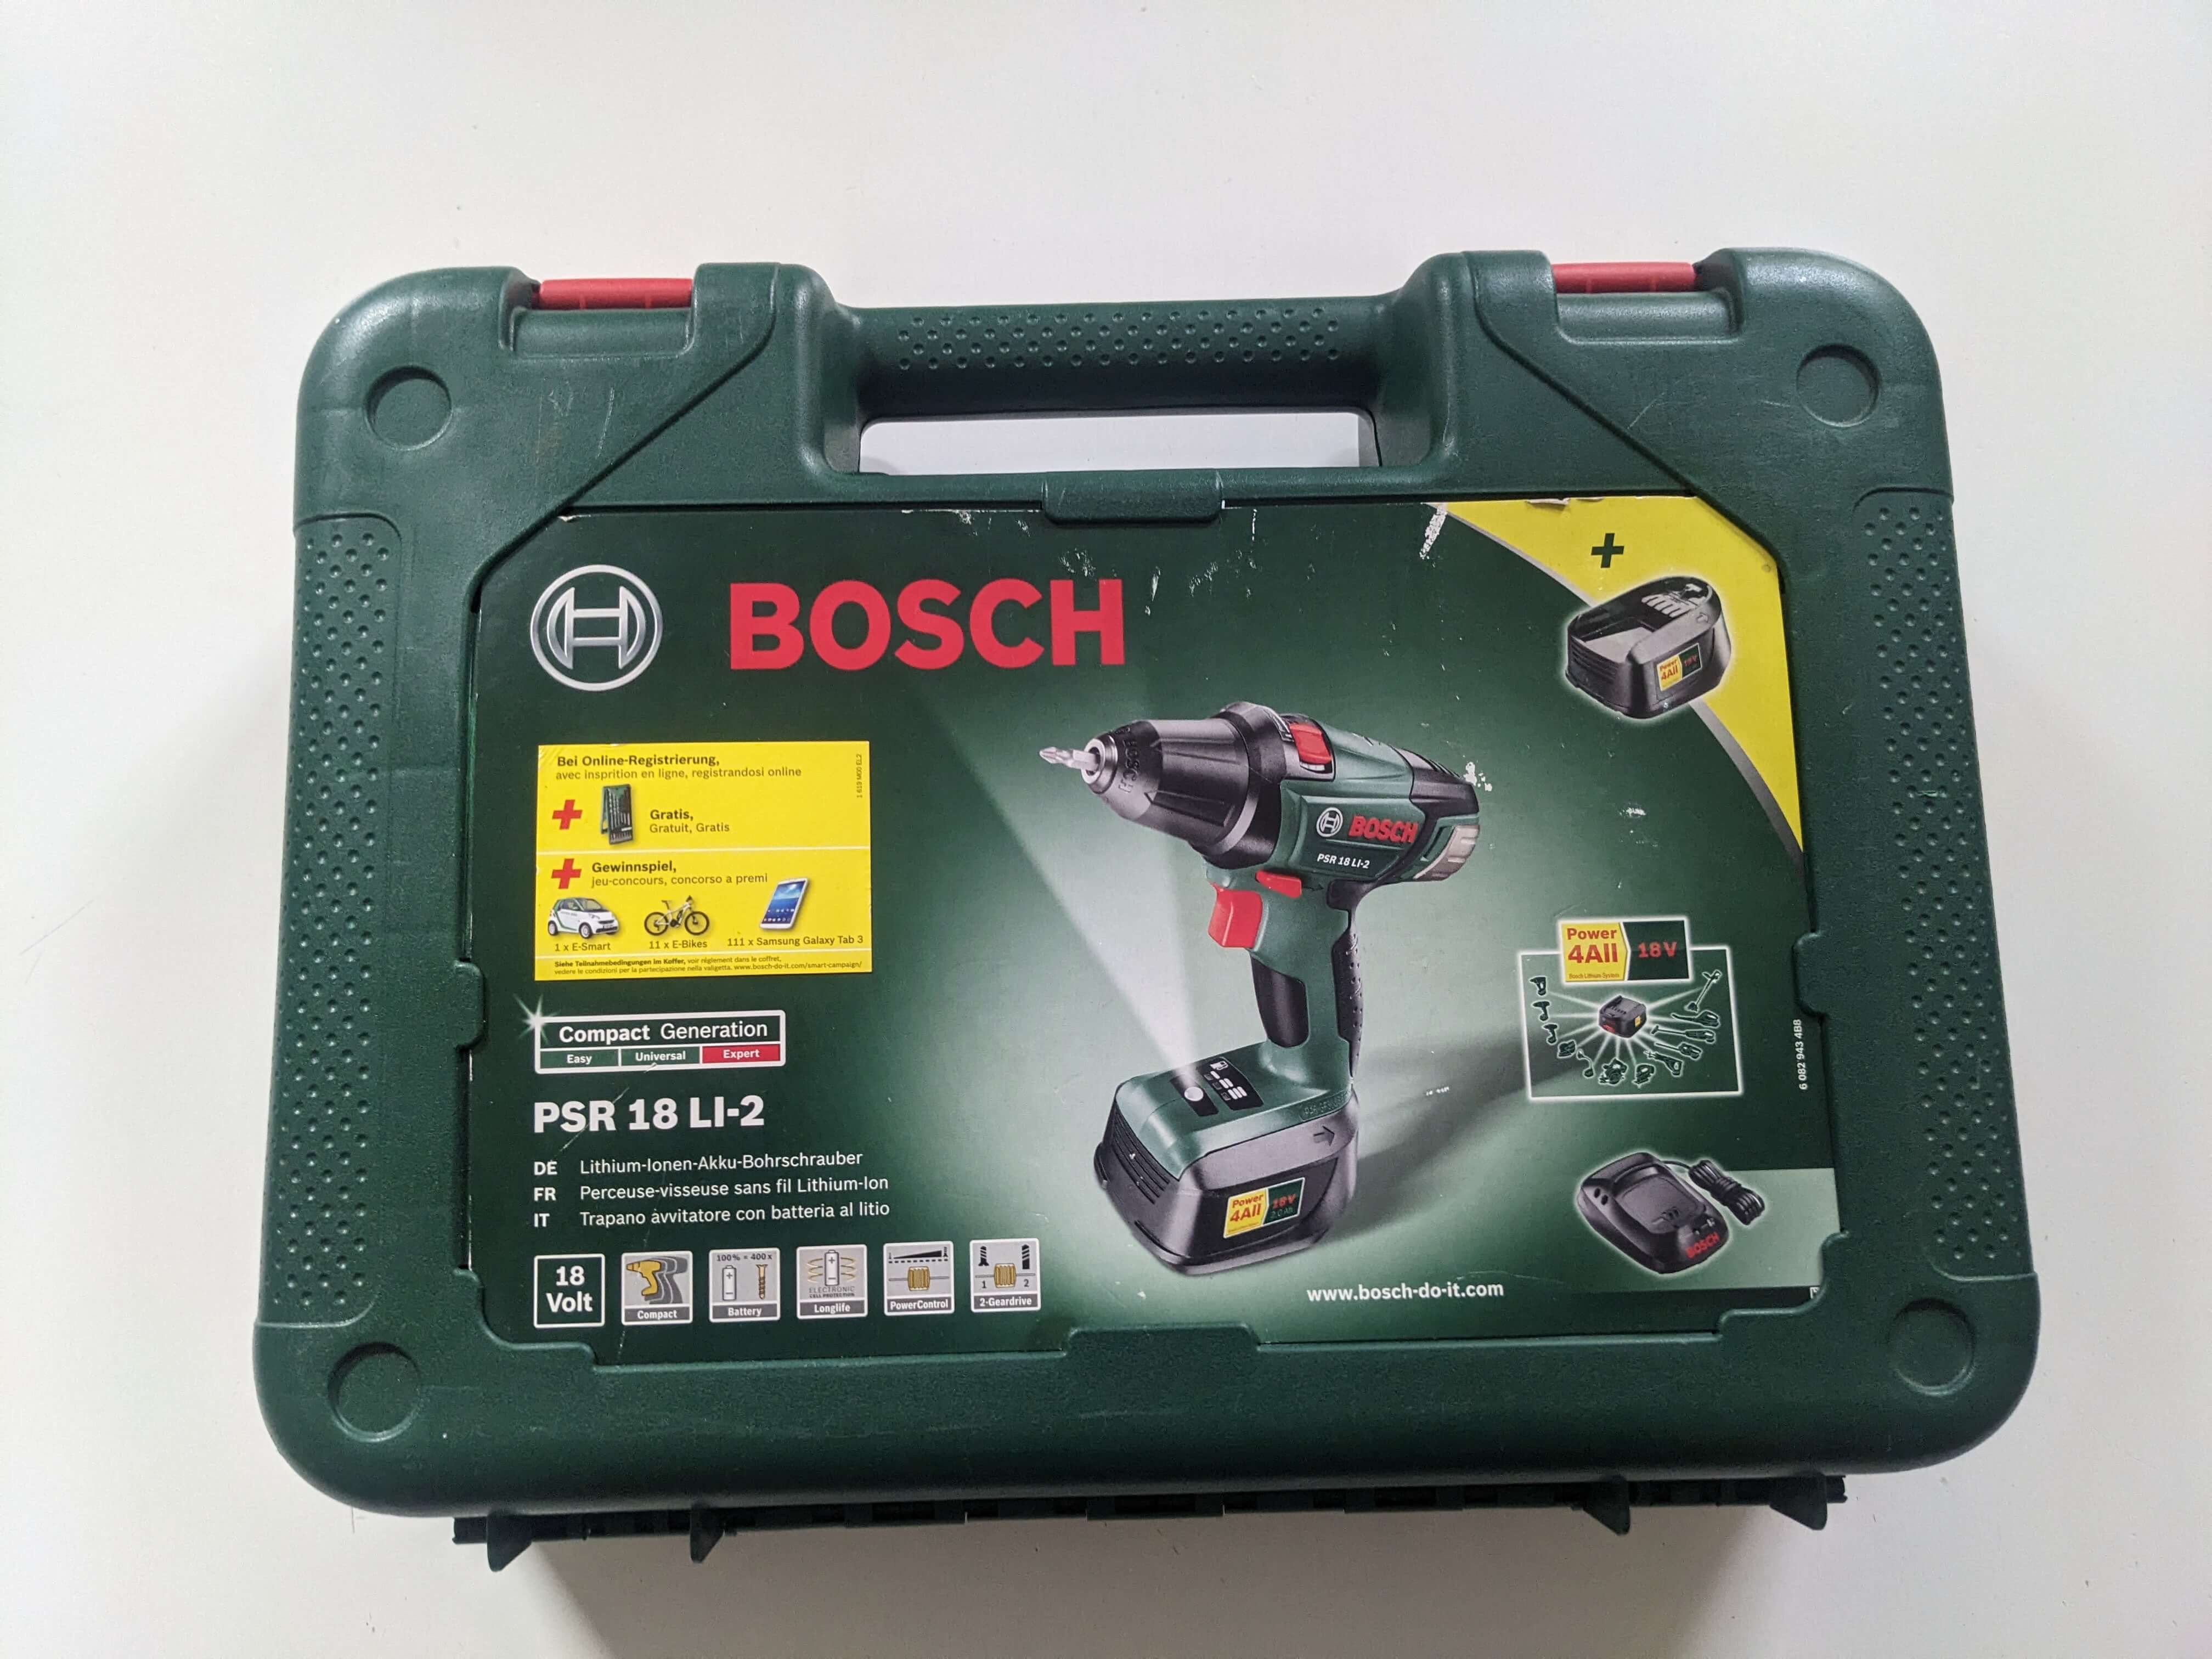 Bosch PSR 18 LI-2 Akku-Bohrschrauber - 054c8c4c-07ab-4626-b344-a4a94ee5cc6a